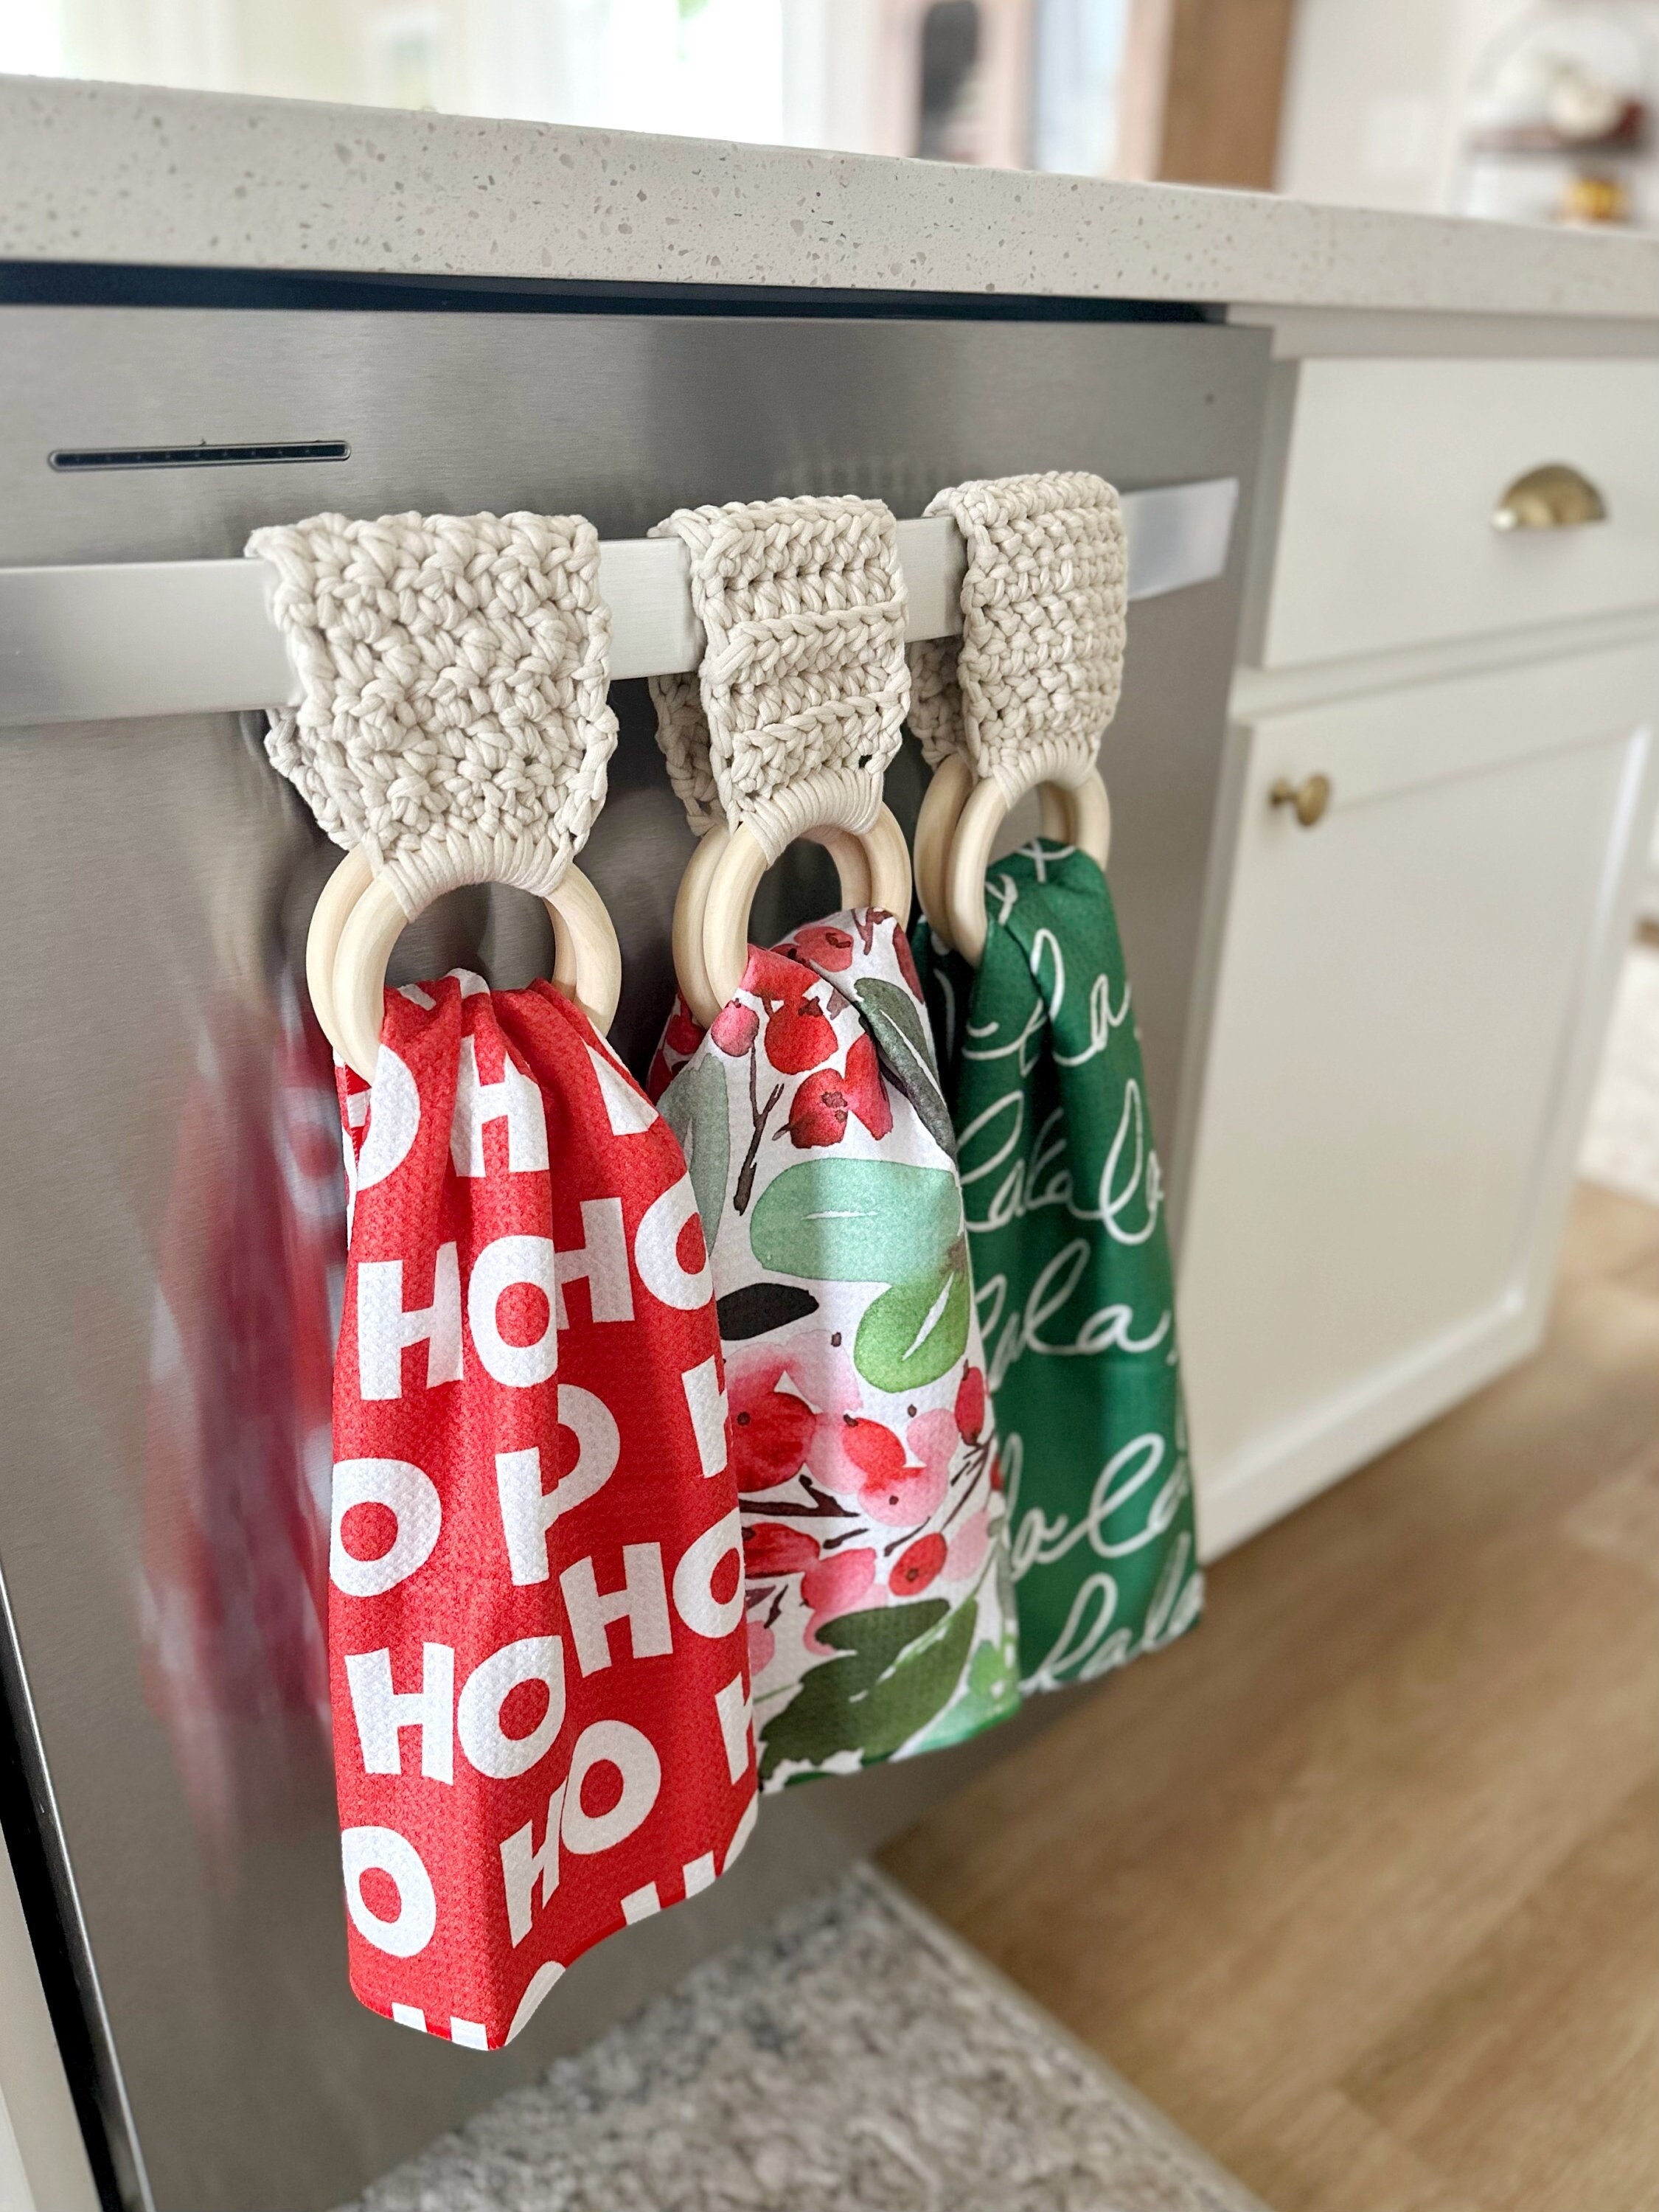 DIY Potholder Hanging Kitchen Towel Tutorial